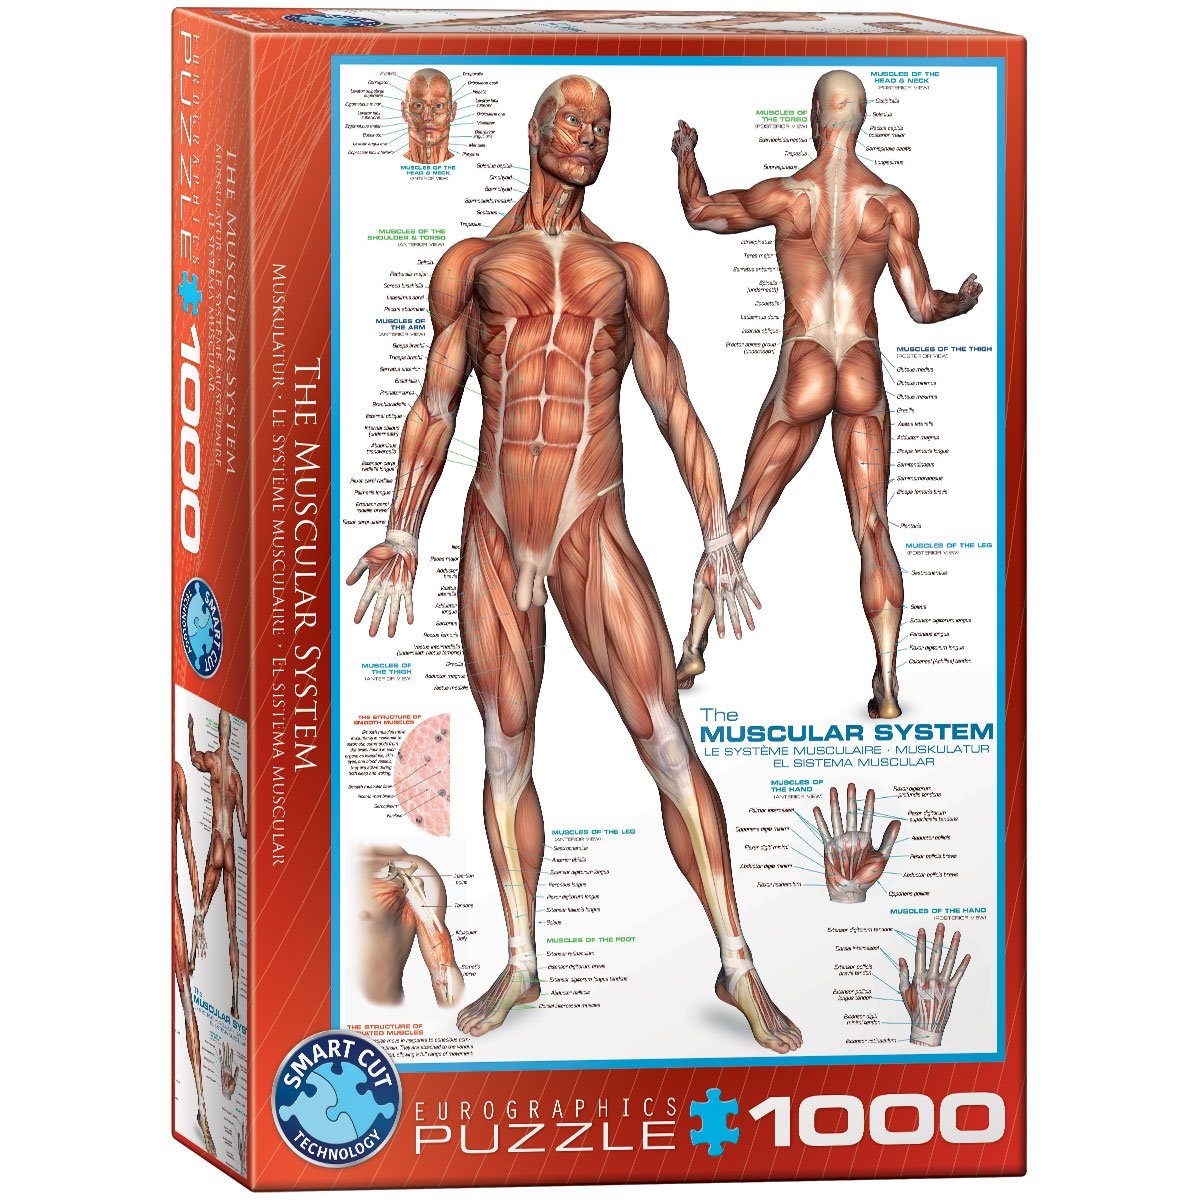 EUROGRAPHICS Puzzle EuroGraphics 6000-2015 Das Muskelsystem Puzzle, 1000 Puzzleteile